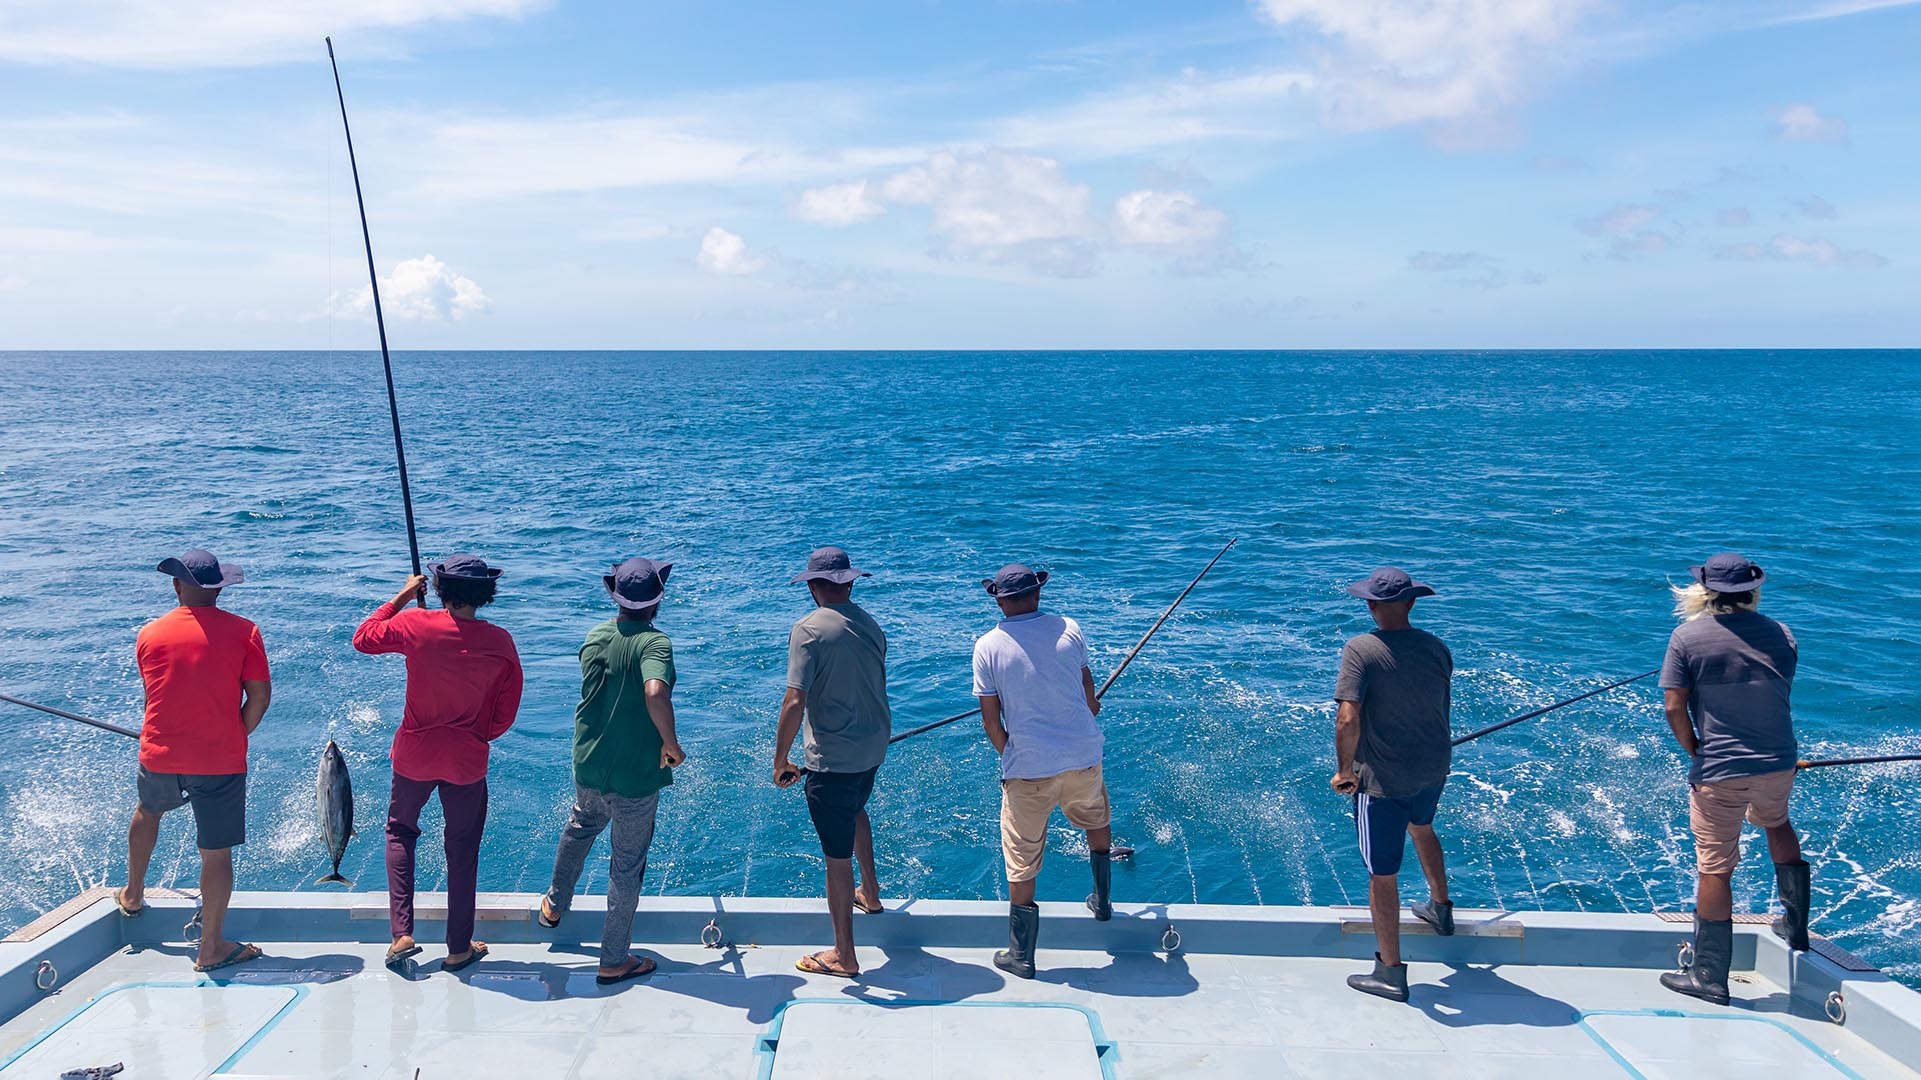 Maldives skipjack tuna: a sustainability success story